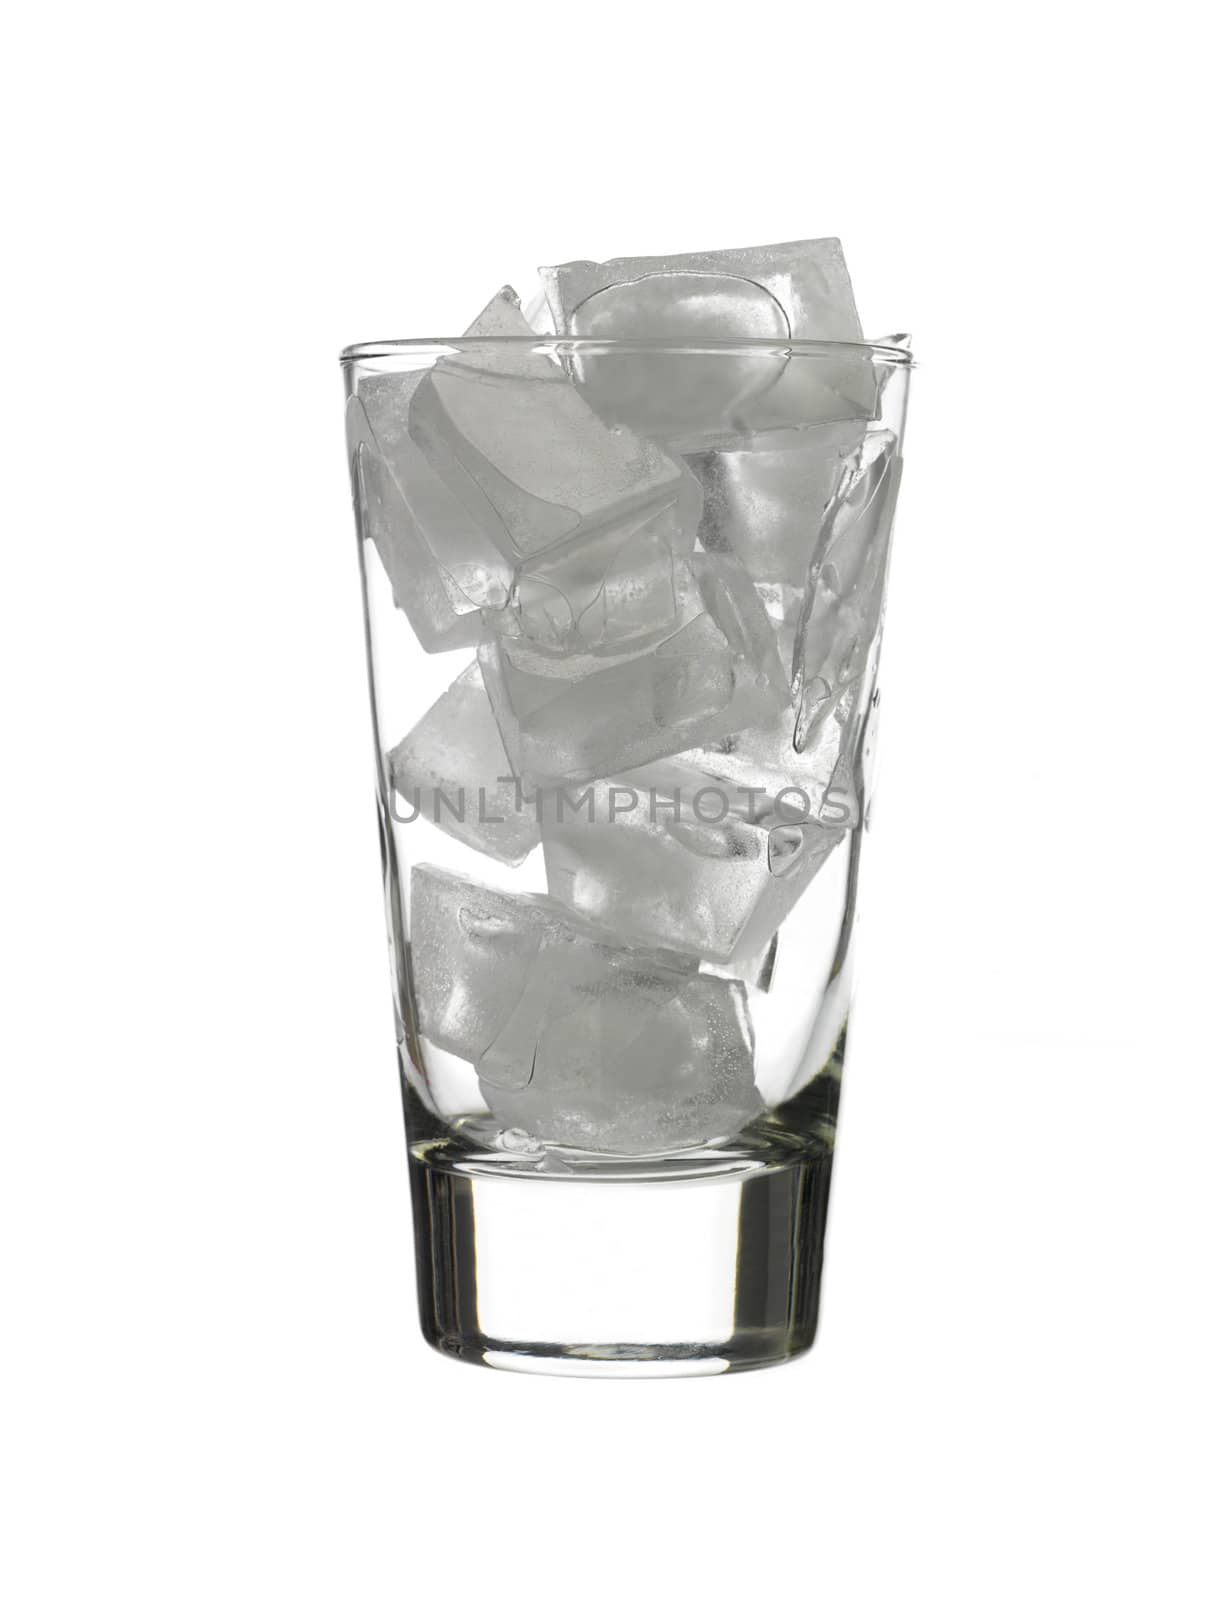 glass of ice by gemenacom